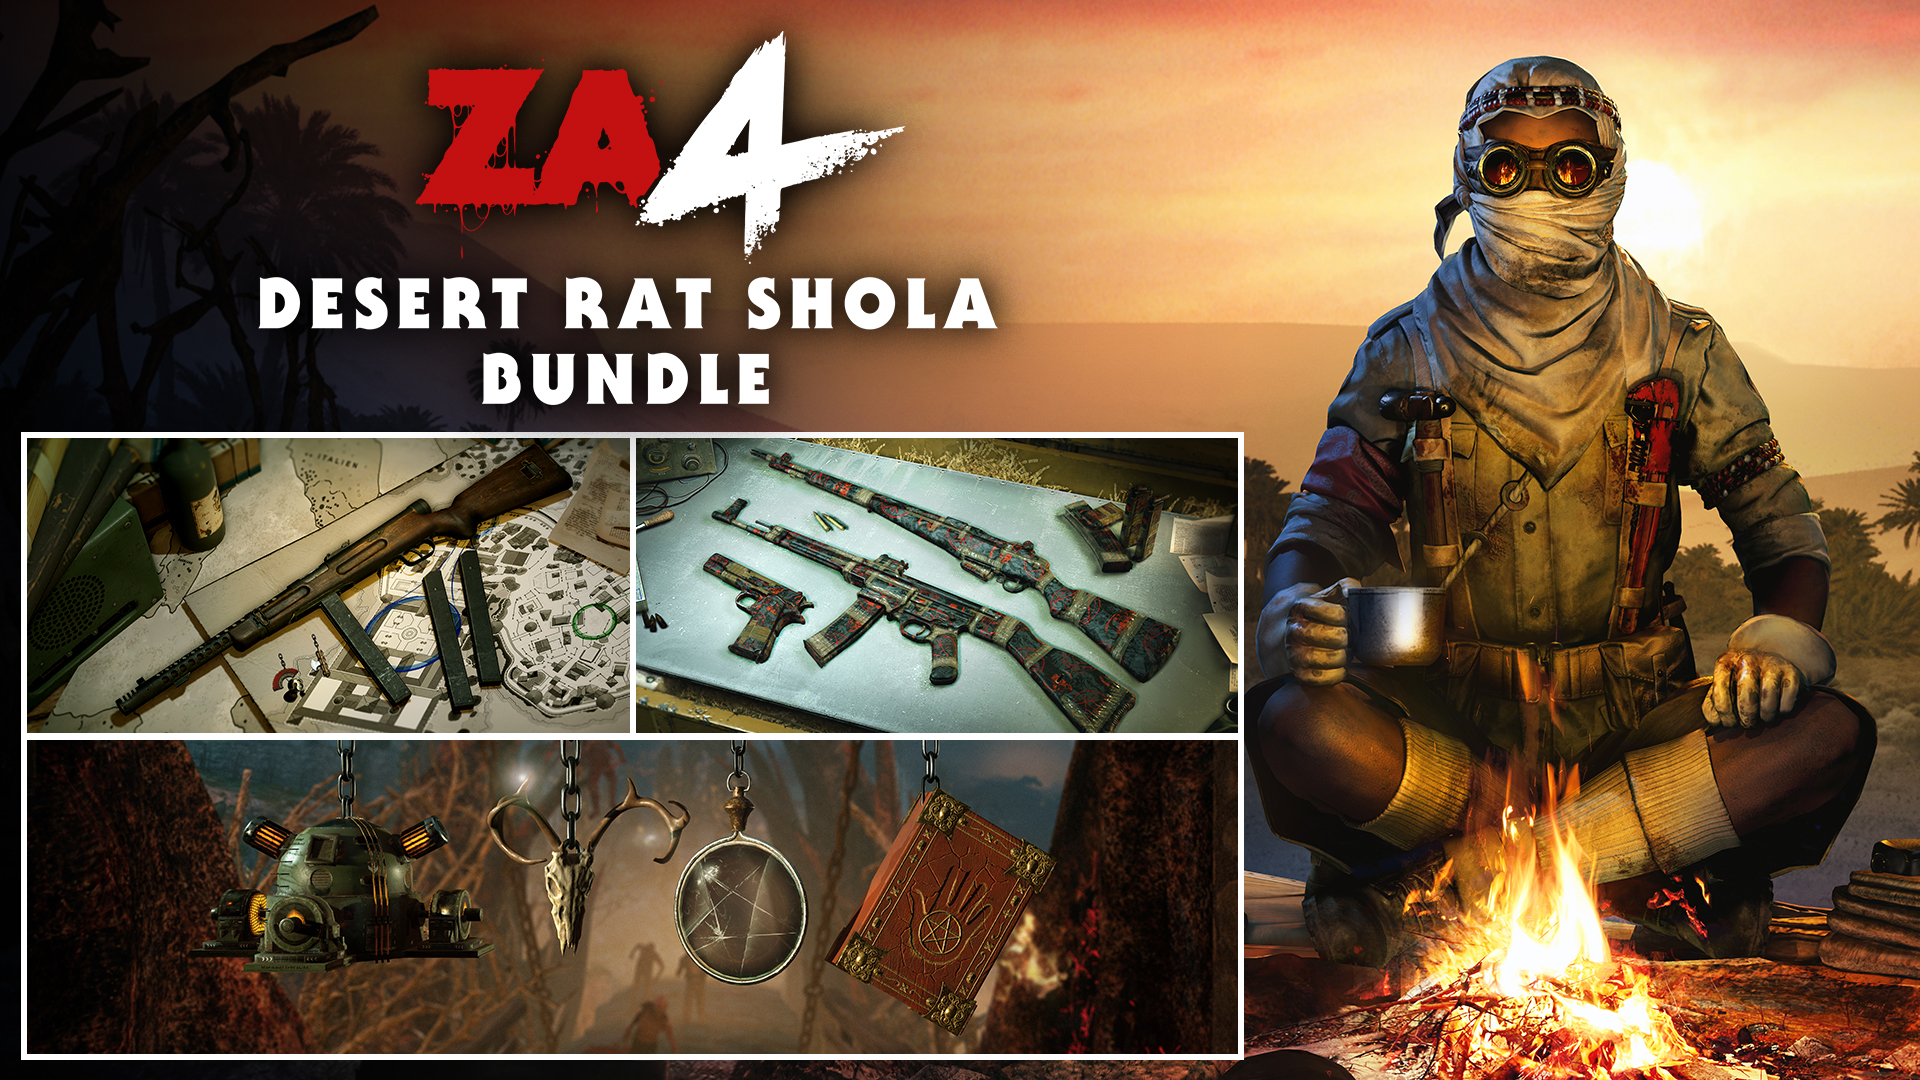 Zombie Army 4: Desert Rat Shola Bundle